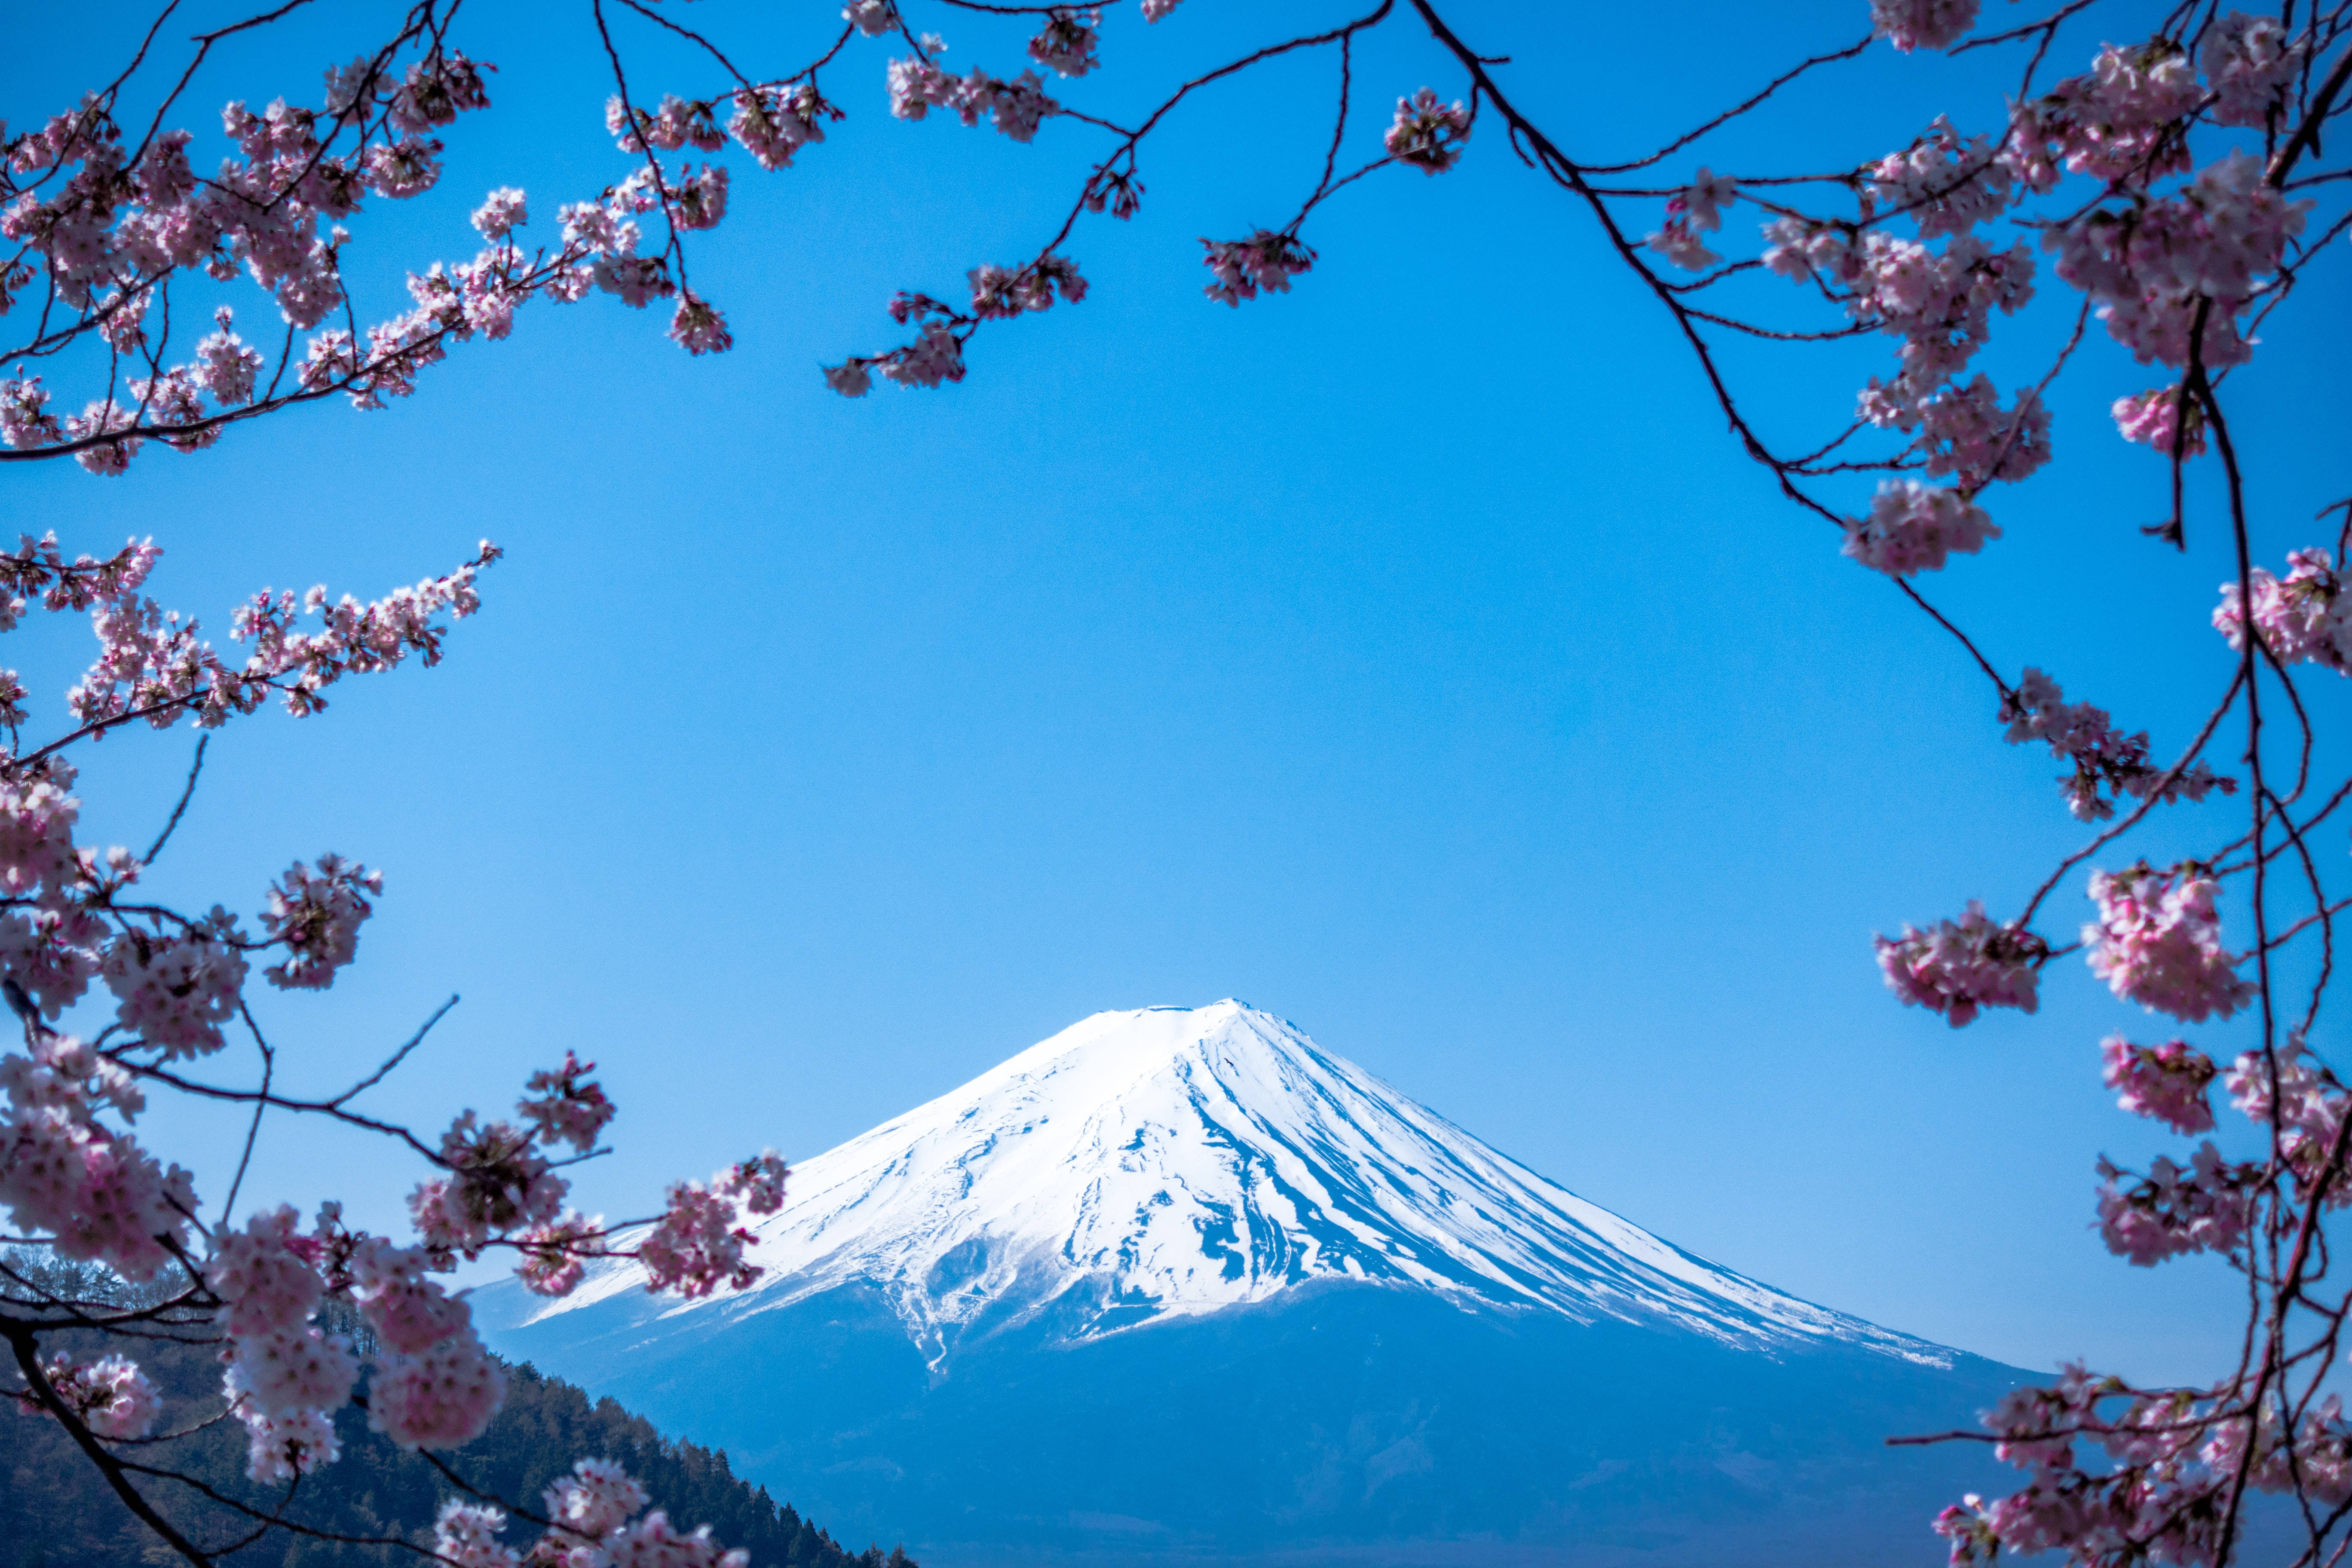 Japanese Hd Mount Fuji And Sakura Blossoms Background